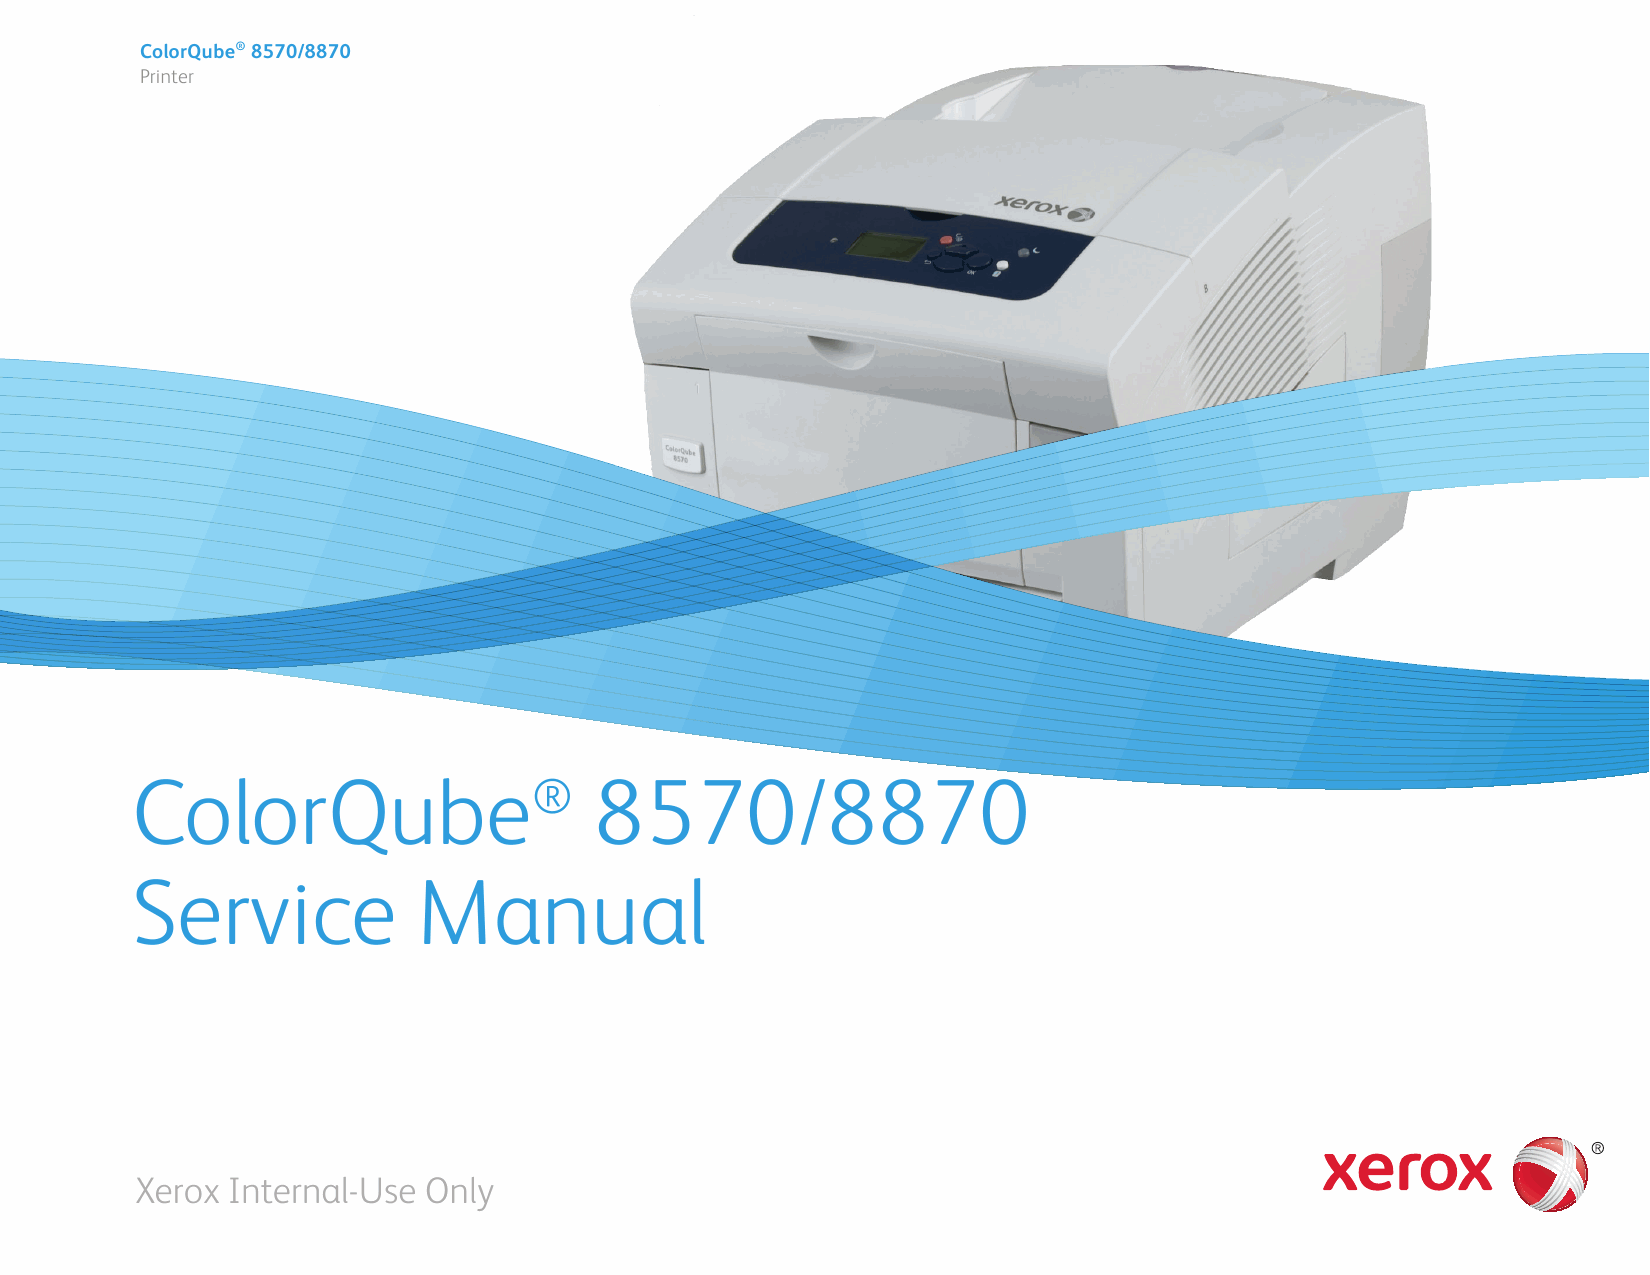 Xerox Printer ColorQube-8570 8870 Parts List and Service Manual-1